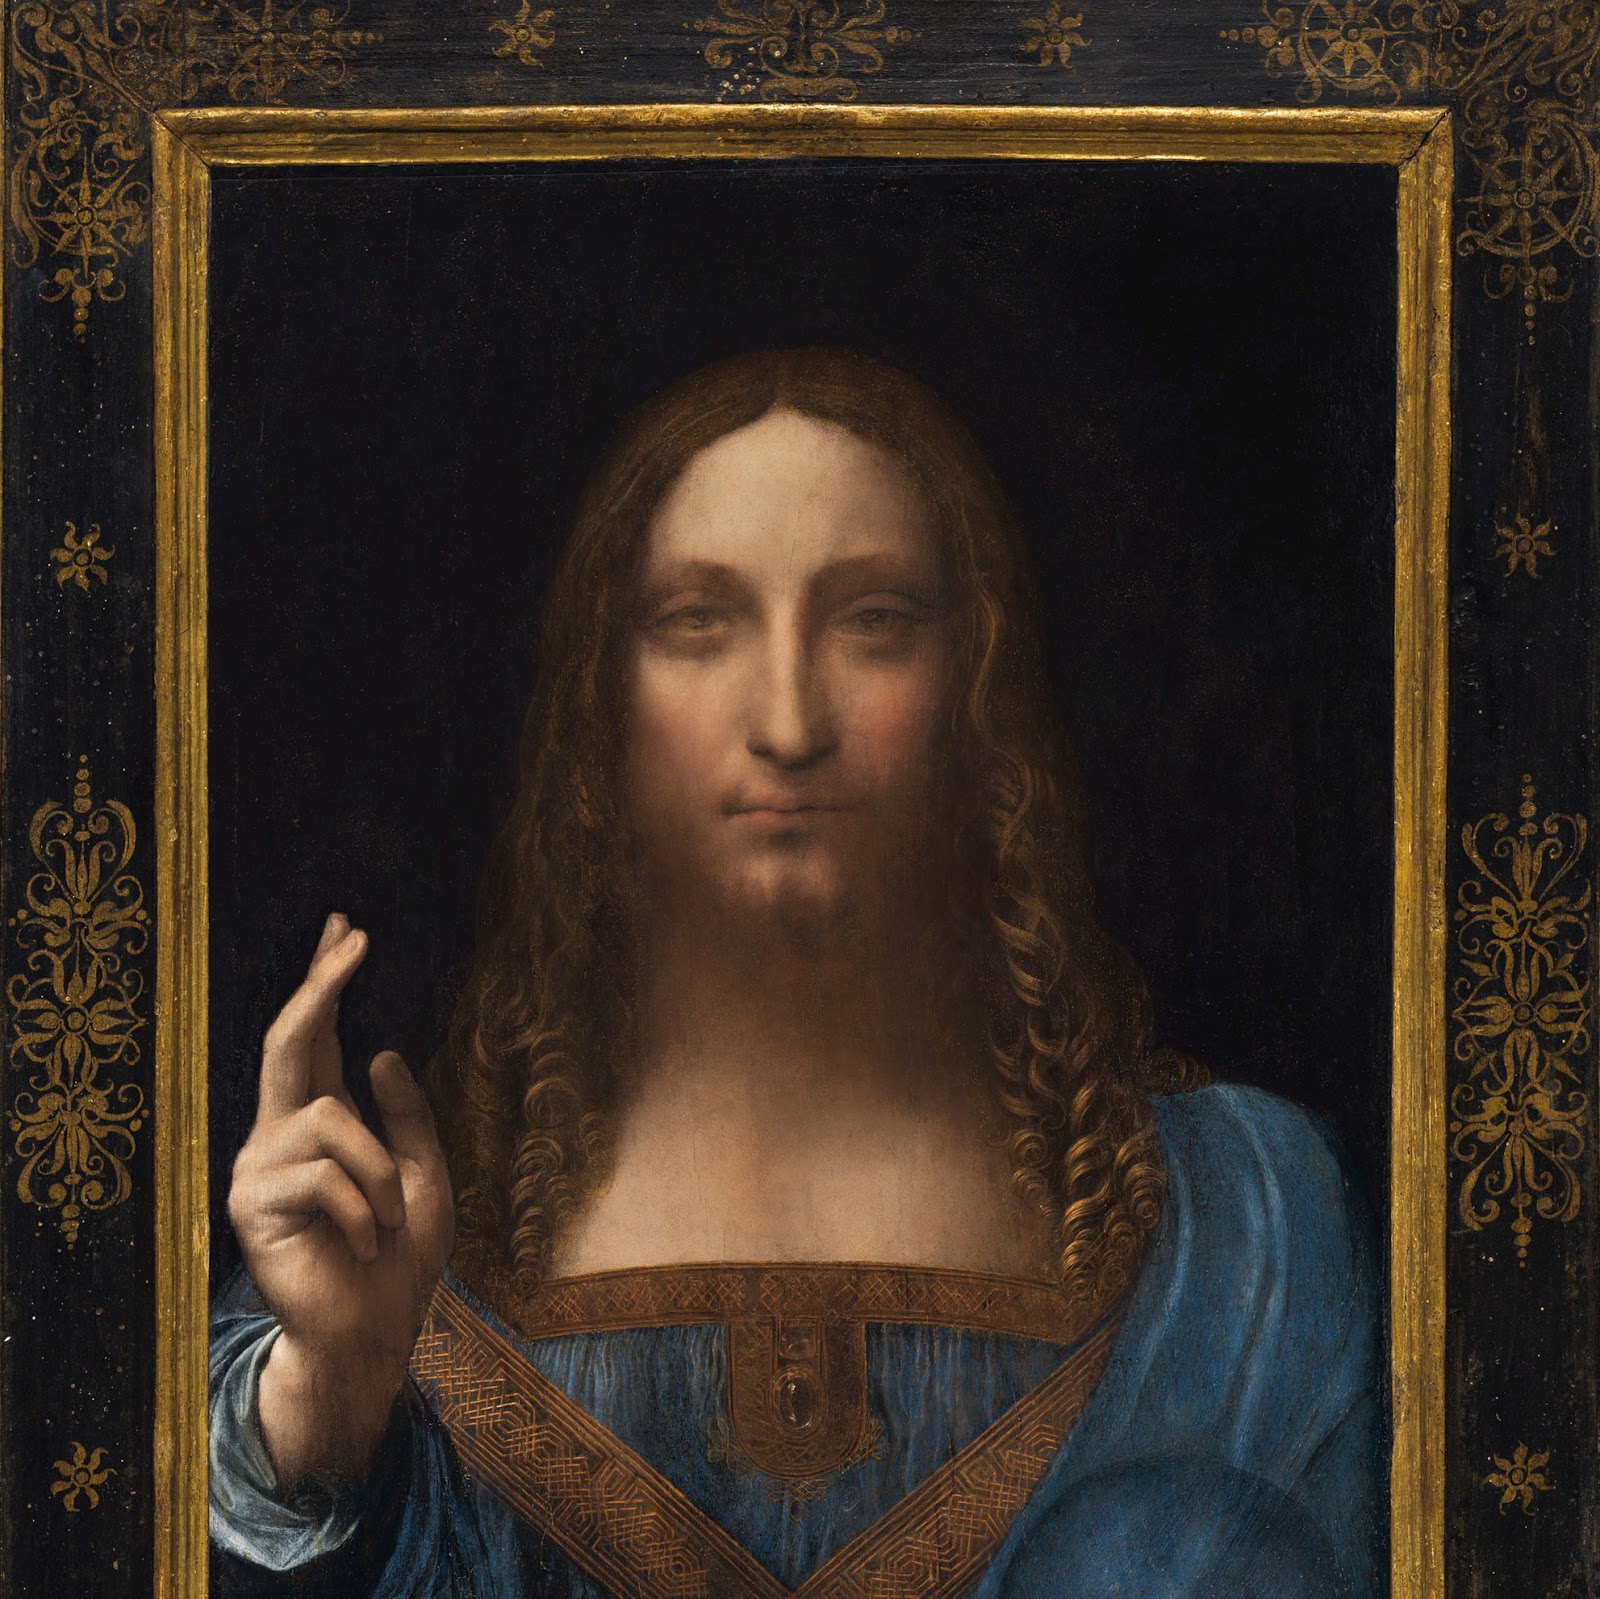 Leonardo+da+Vinci-1452-1519 (855).jpg